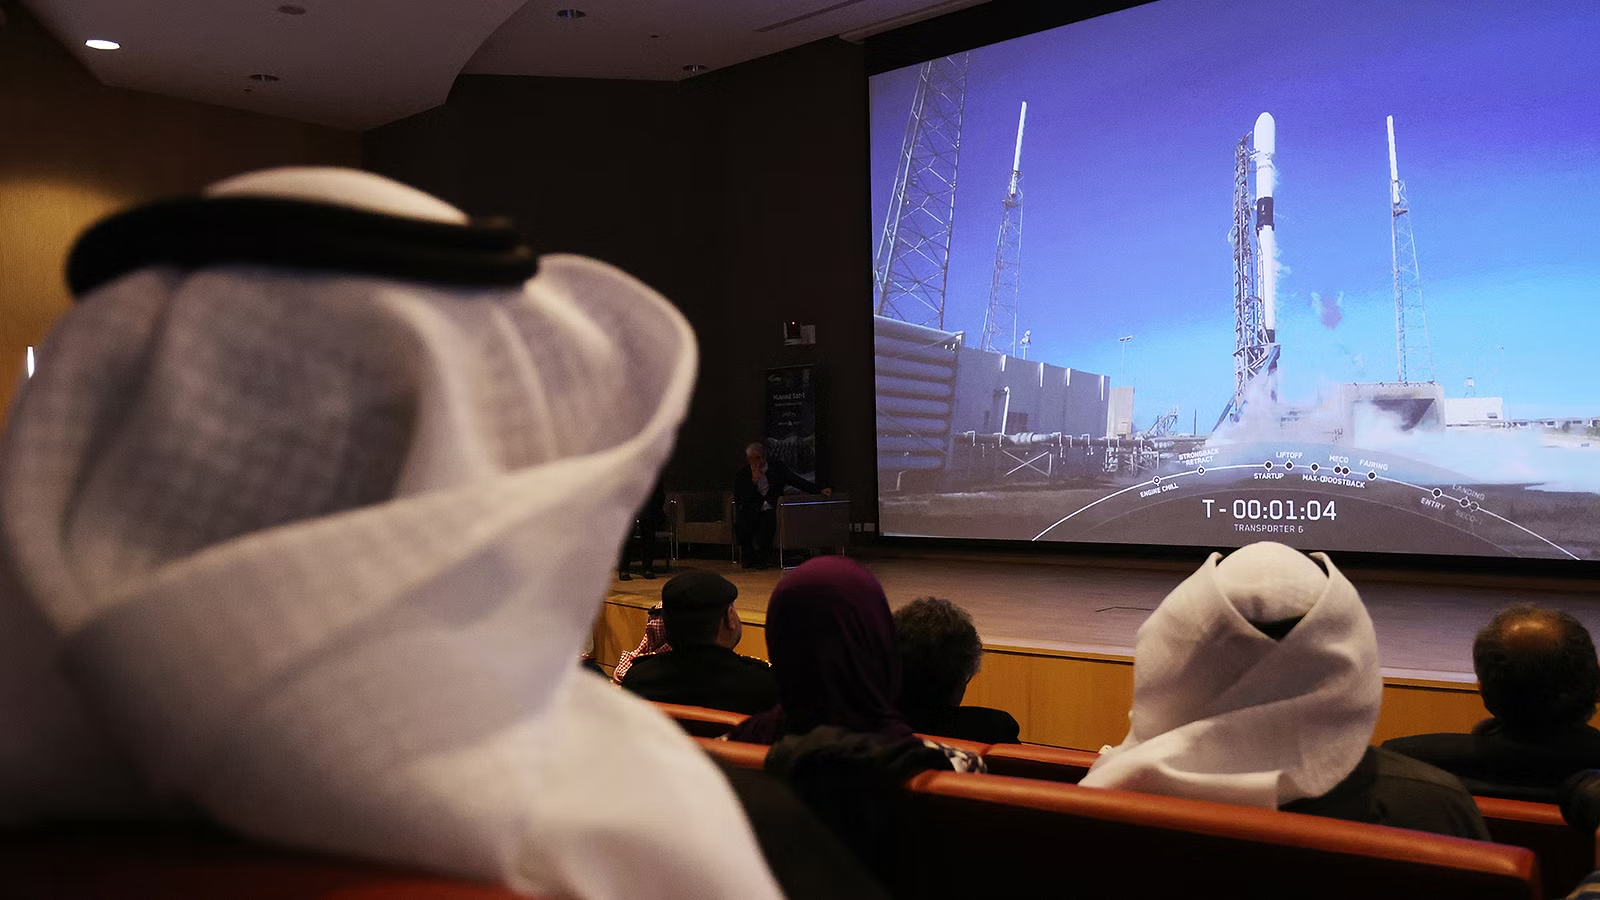 Kuwait Launches Its First Satellite 'Kuwait Sat-1'